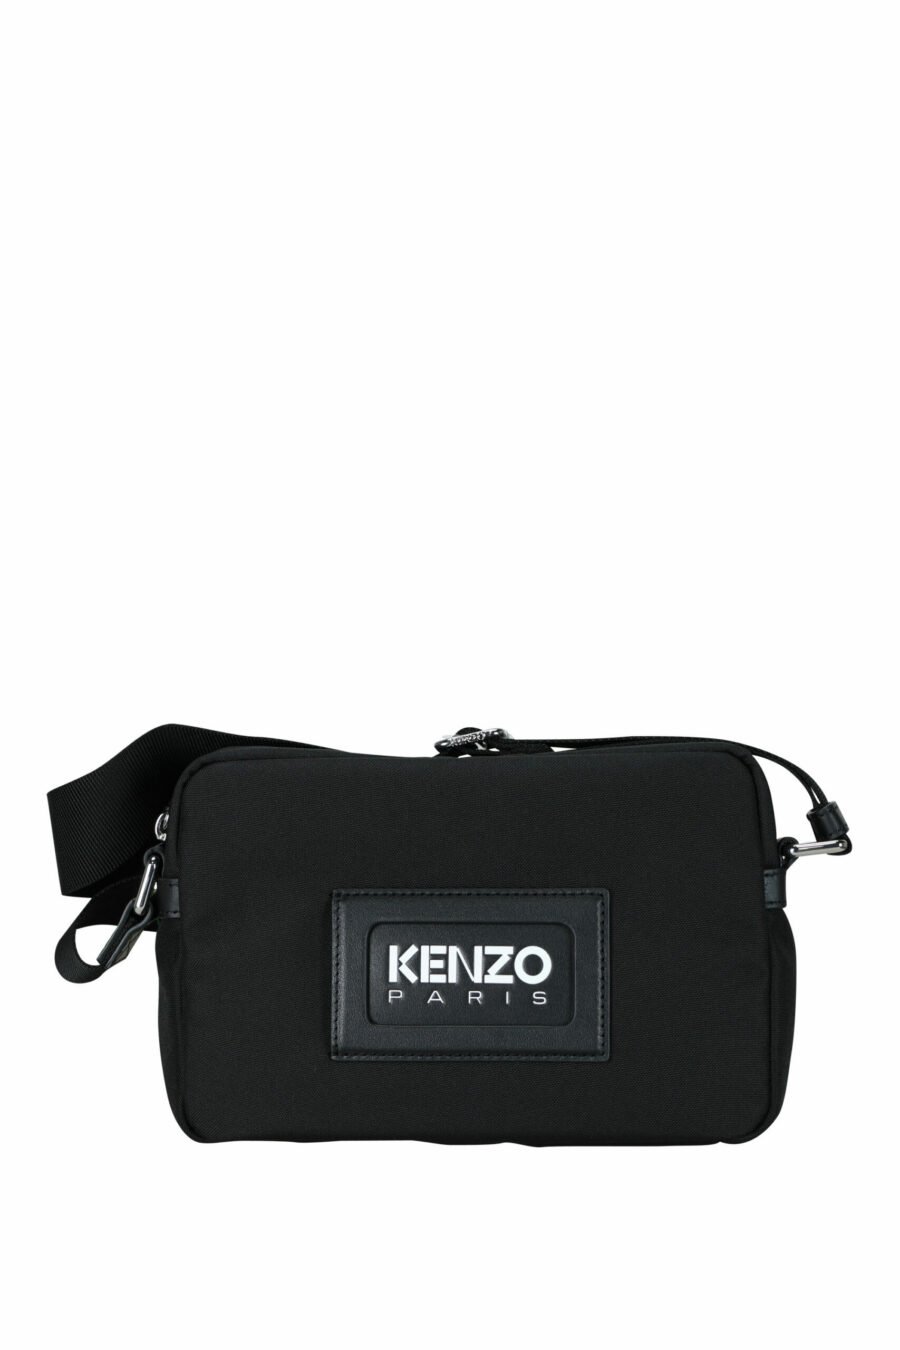 Black crossbody bag with "kenzography" logo - 3612230580084 scaled